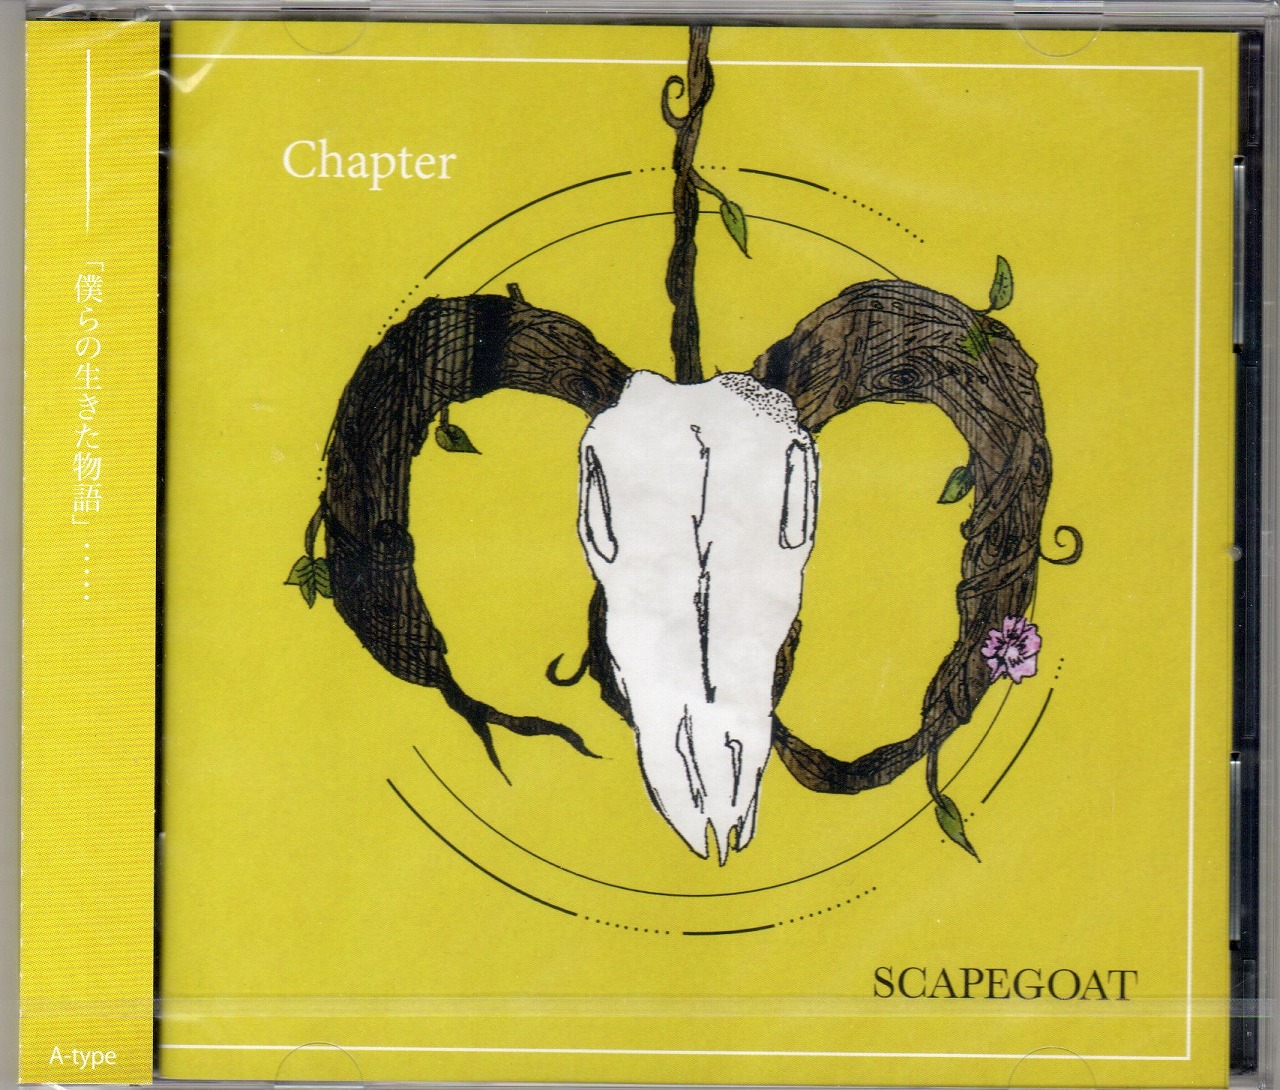 SCAPEGOAT ( スケープゴート )  の CD 【A type】Chapter